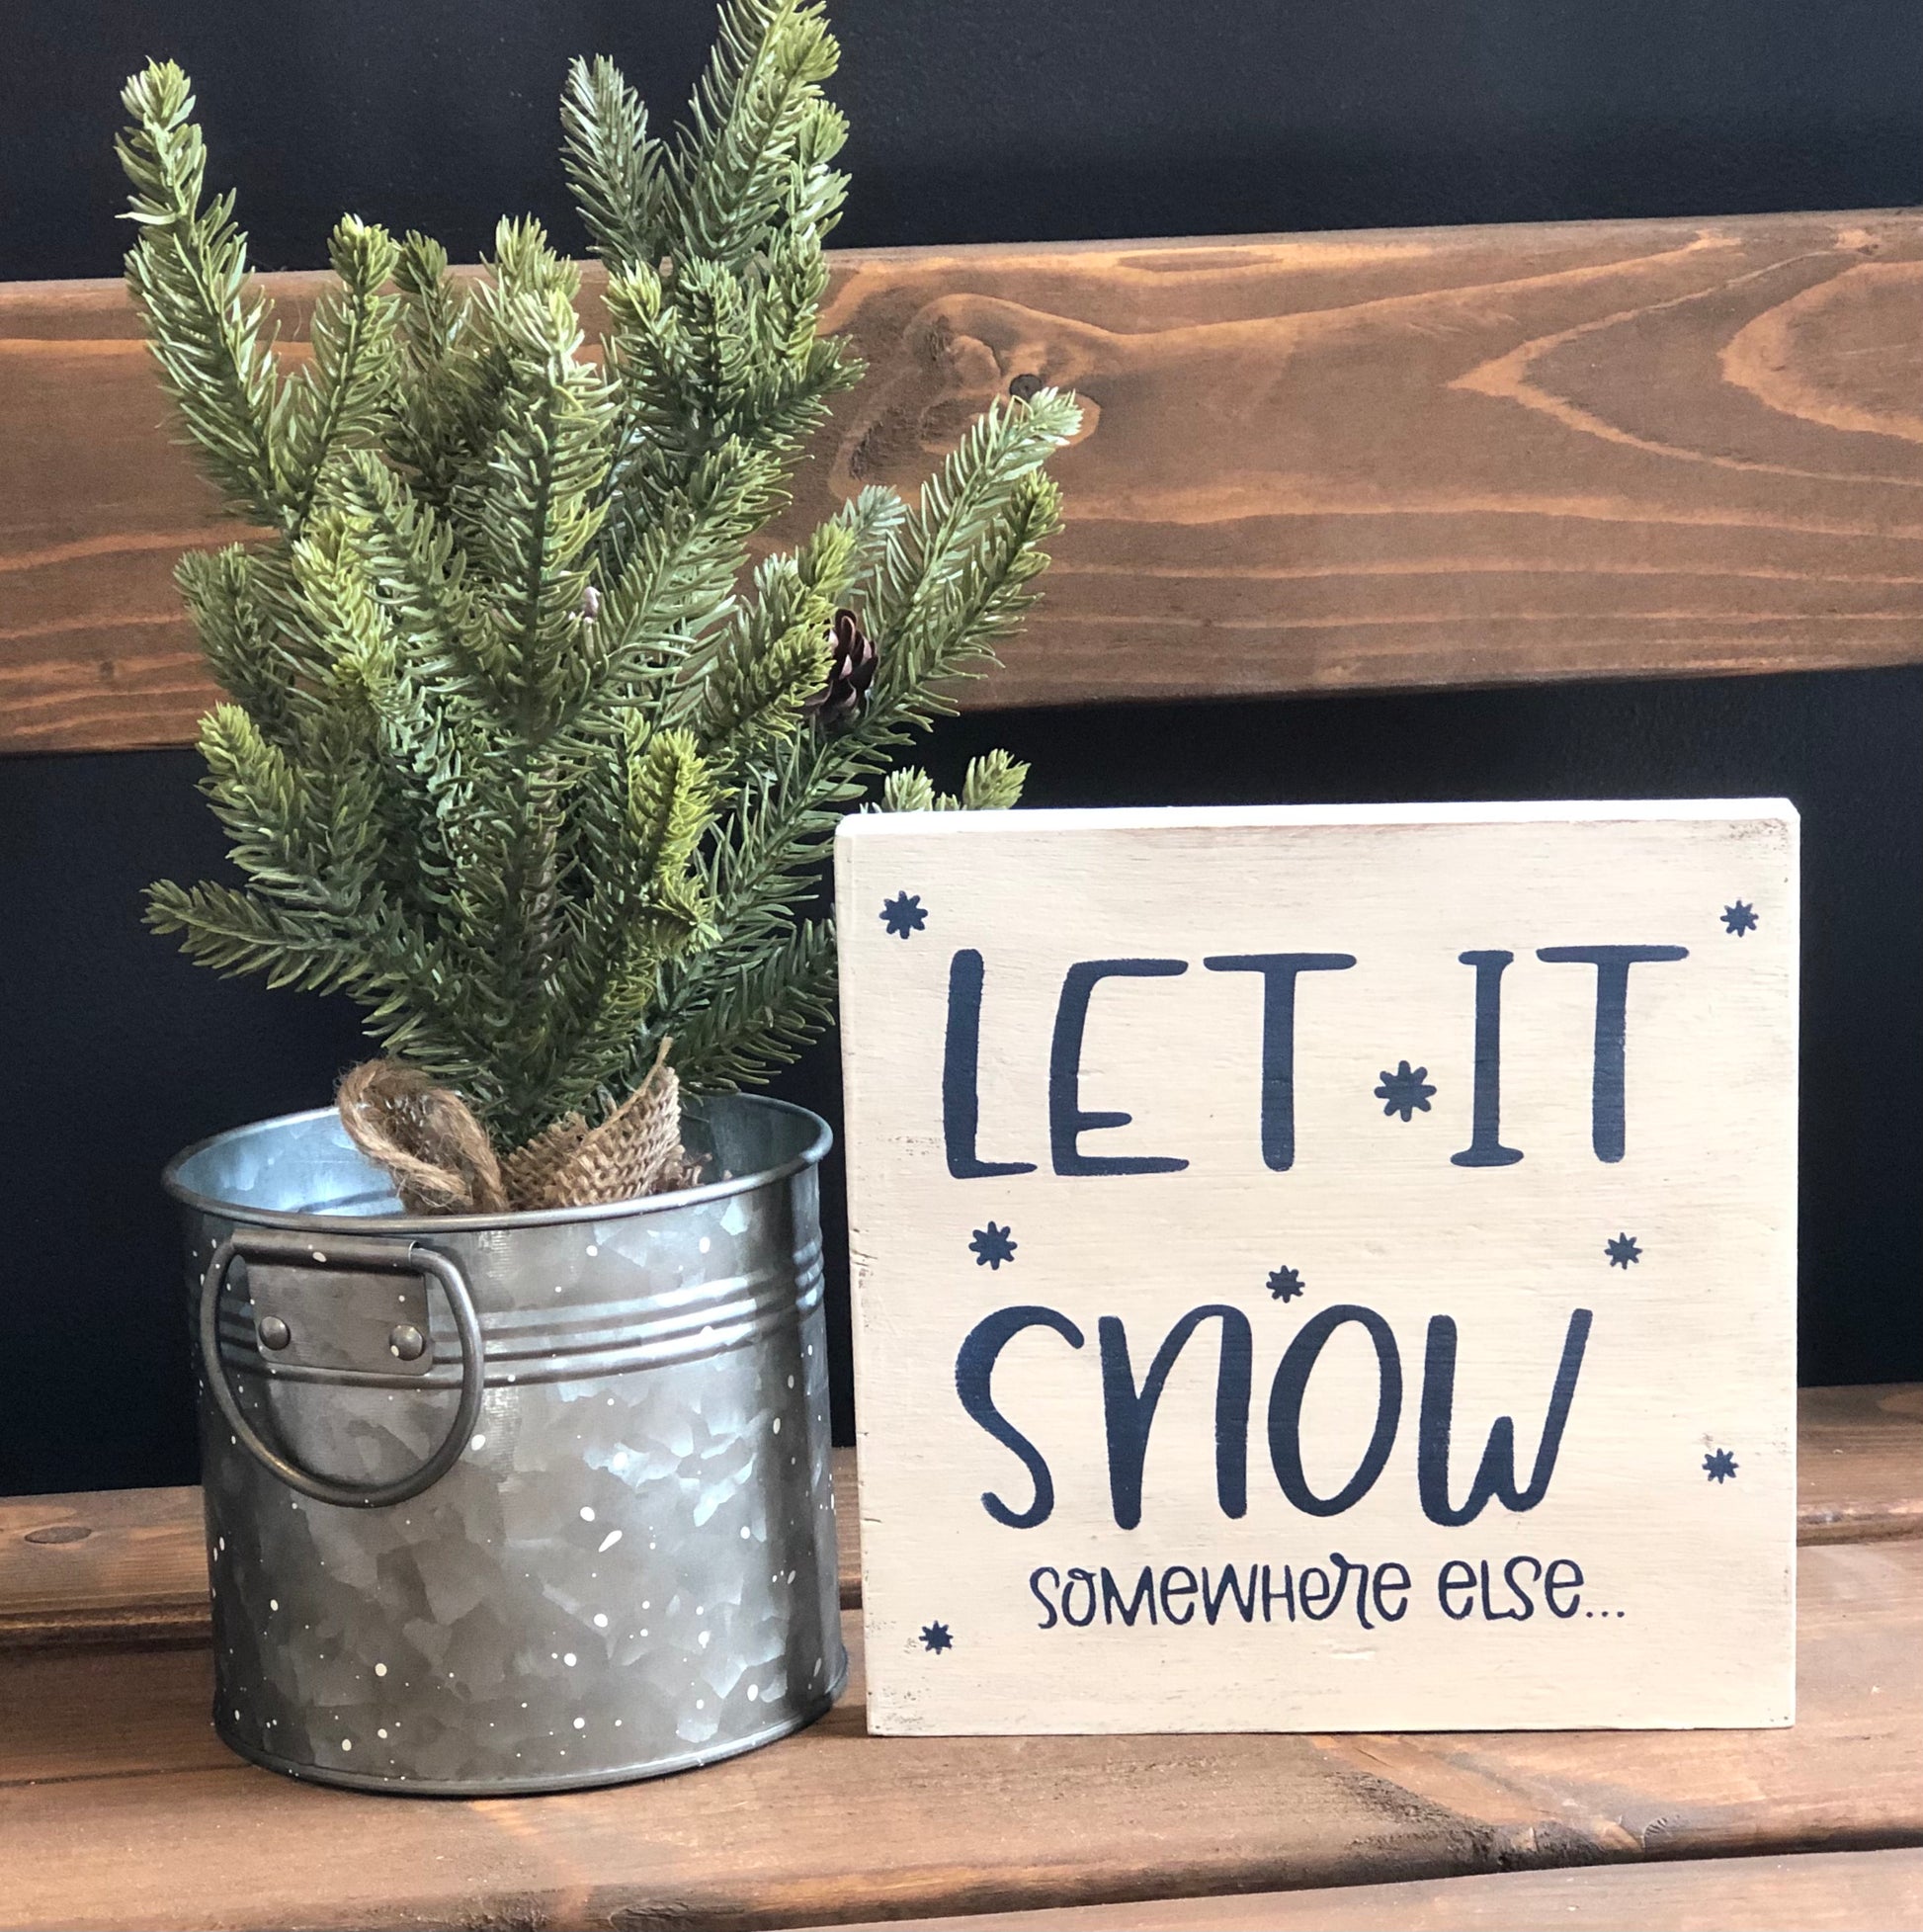 "Let it snow somewhere else" funny wood sign